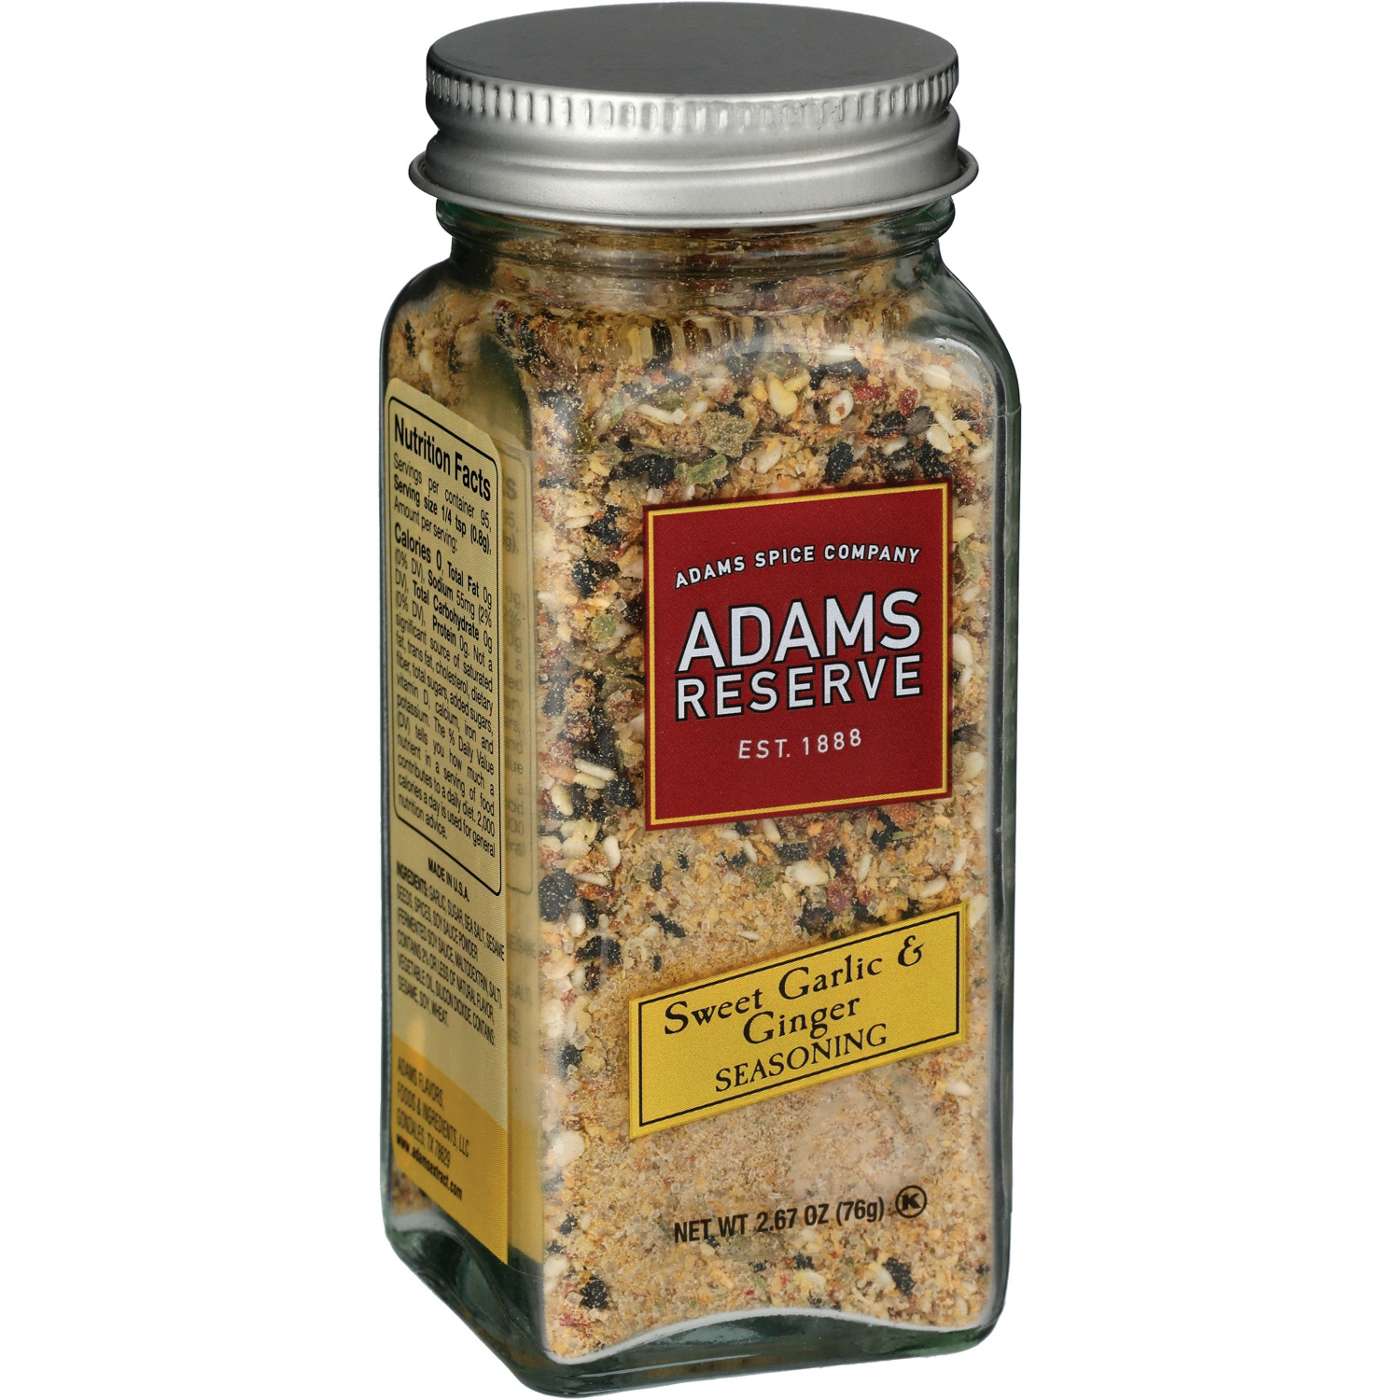 Adams Reserve Sweet Ginger and Garlic Seasoning; image 2 of 2